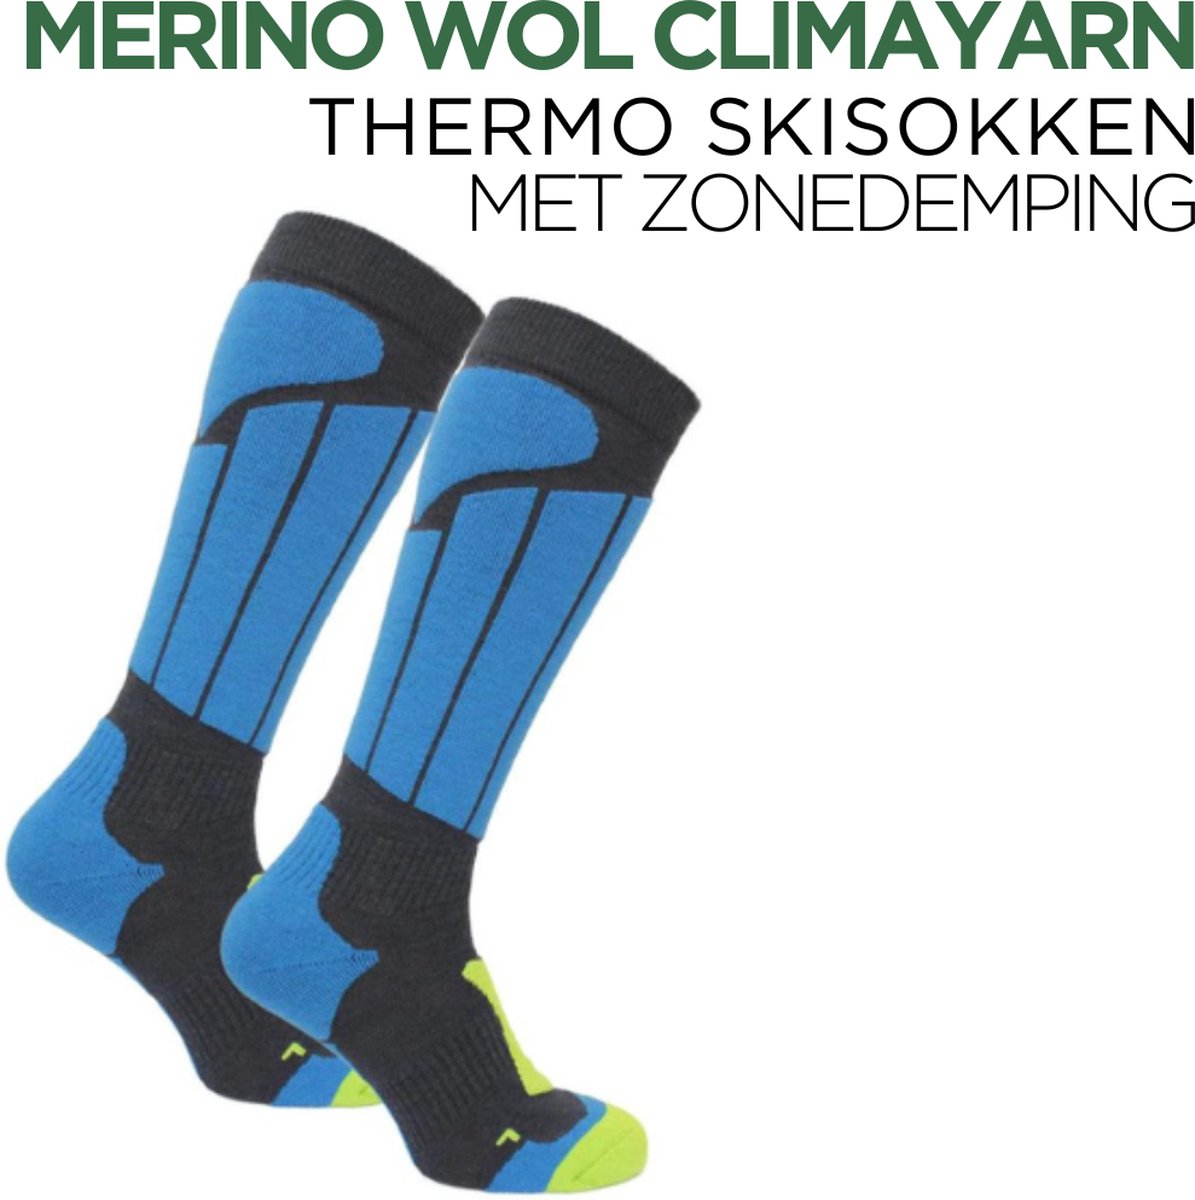 Norfolk Skisokken - 1 paar - Merino wol Climayarn - Thermo Skisokken met Zonedemping - Warm en Droog - Maat 47-50 - Blauw - Aspen